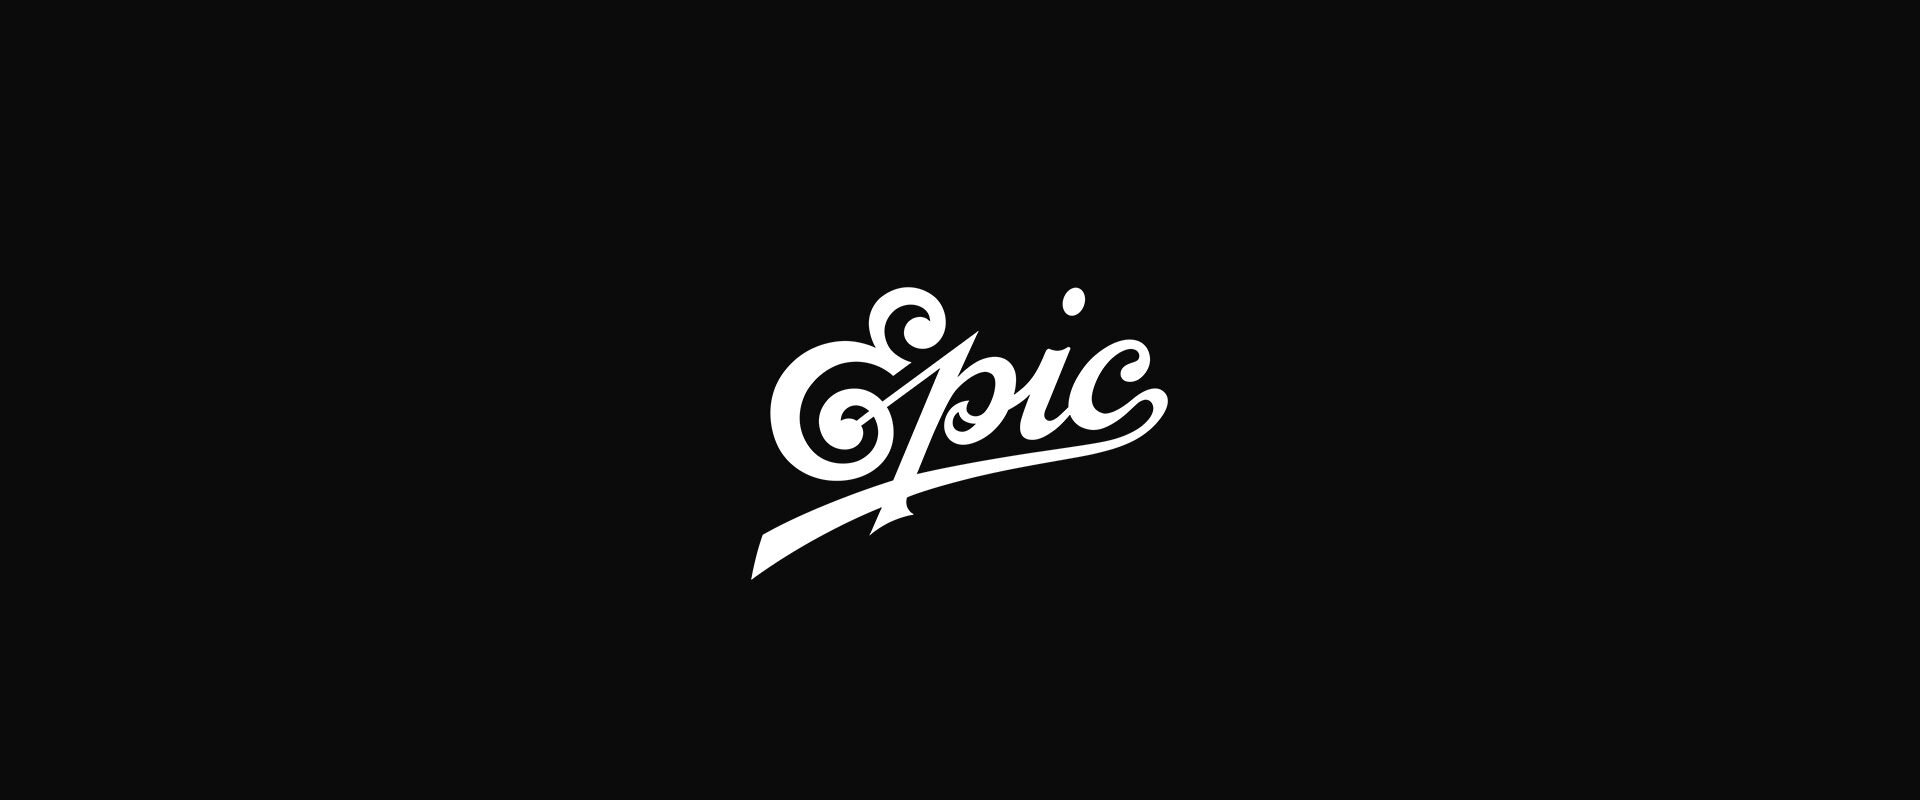 epic-header-1920x800.jpeg